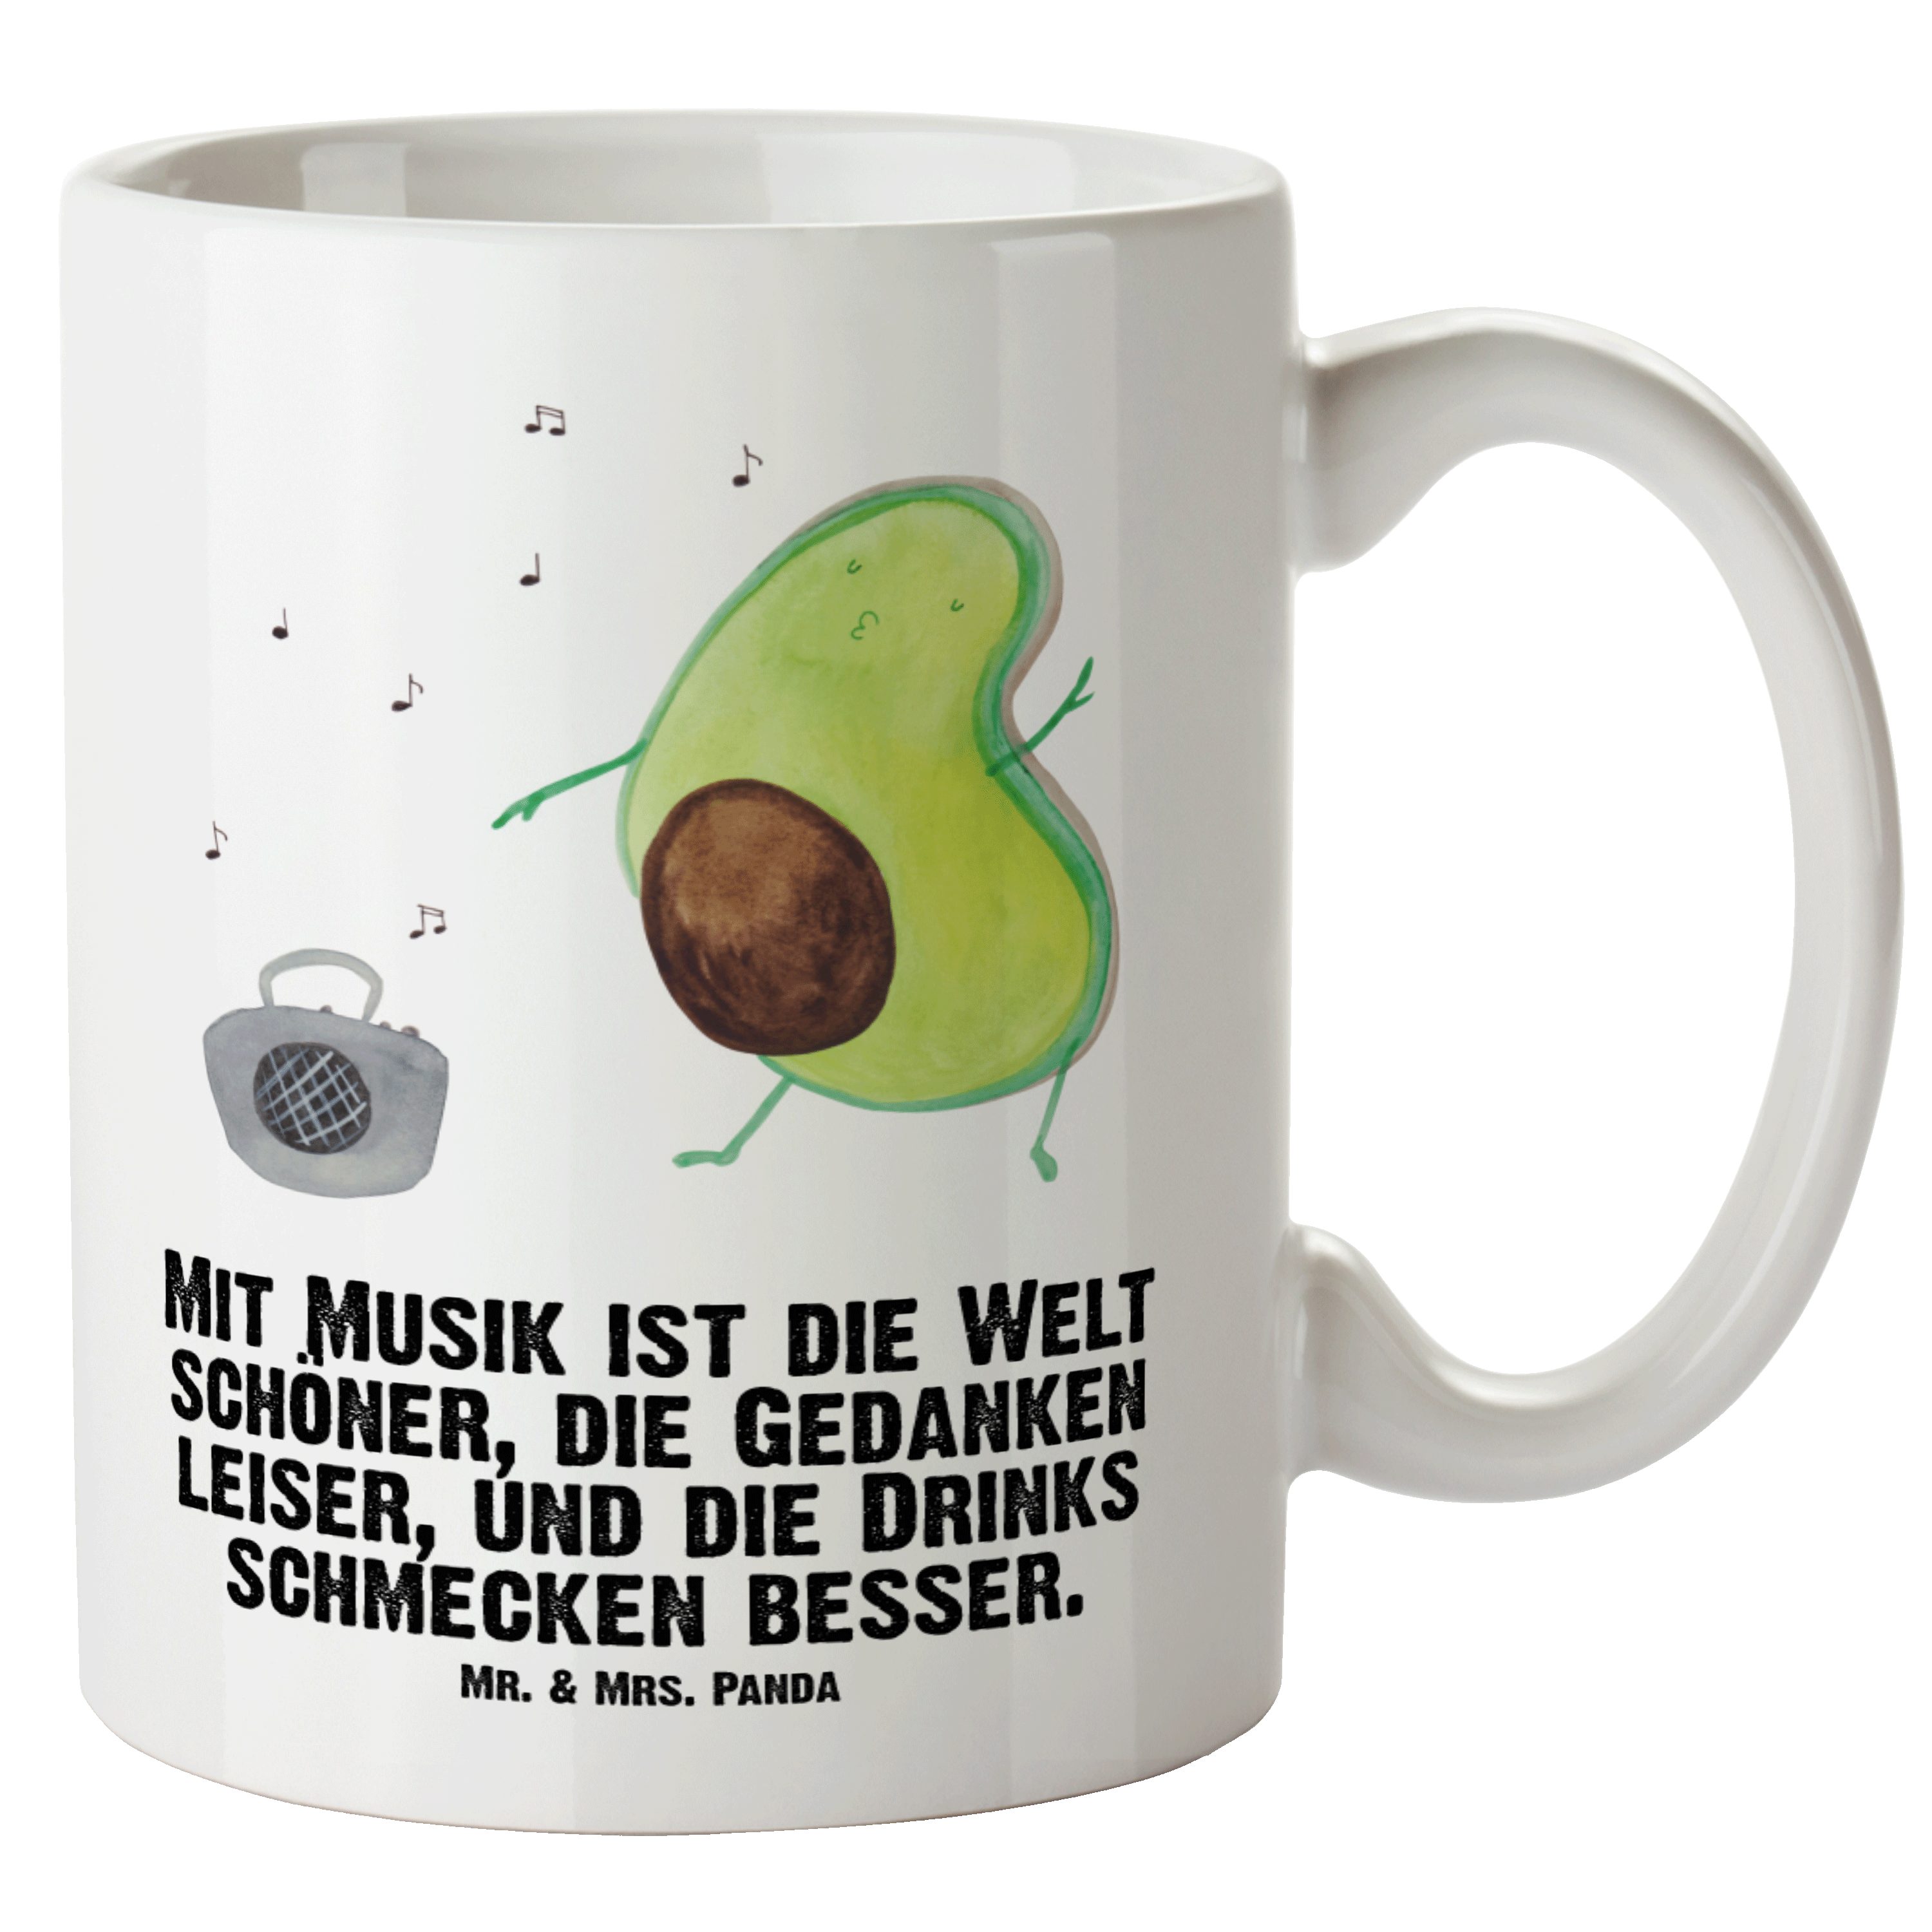 Musik, XL tanzt - Mr. Avocado spülma, Mrs. - Panda Veggie, Keramik Geschenk, Vegan, & Singen, Weiß Tasse Tasse